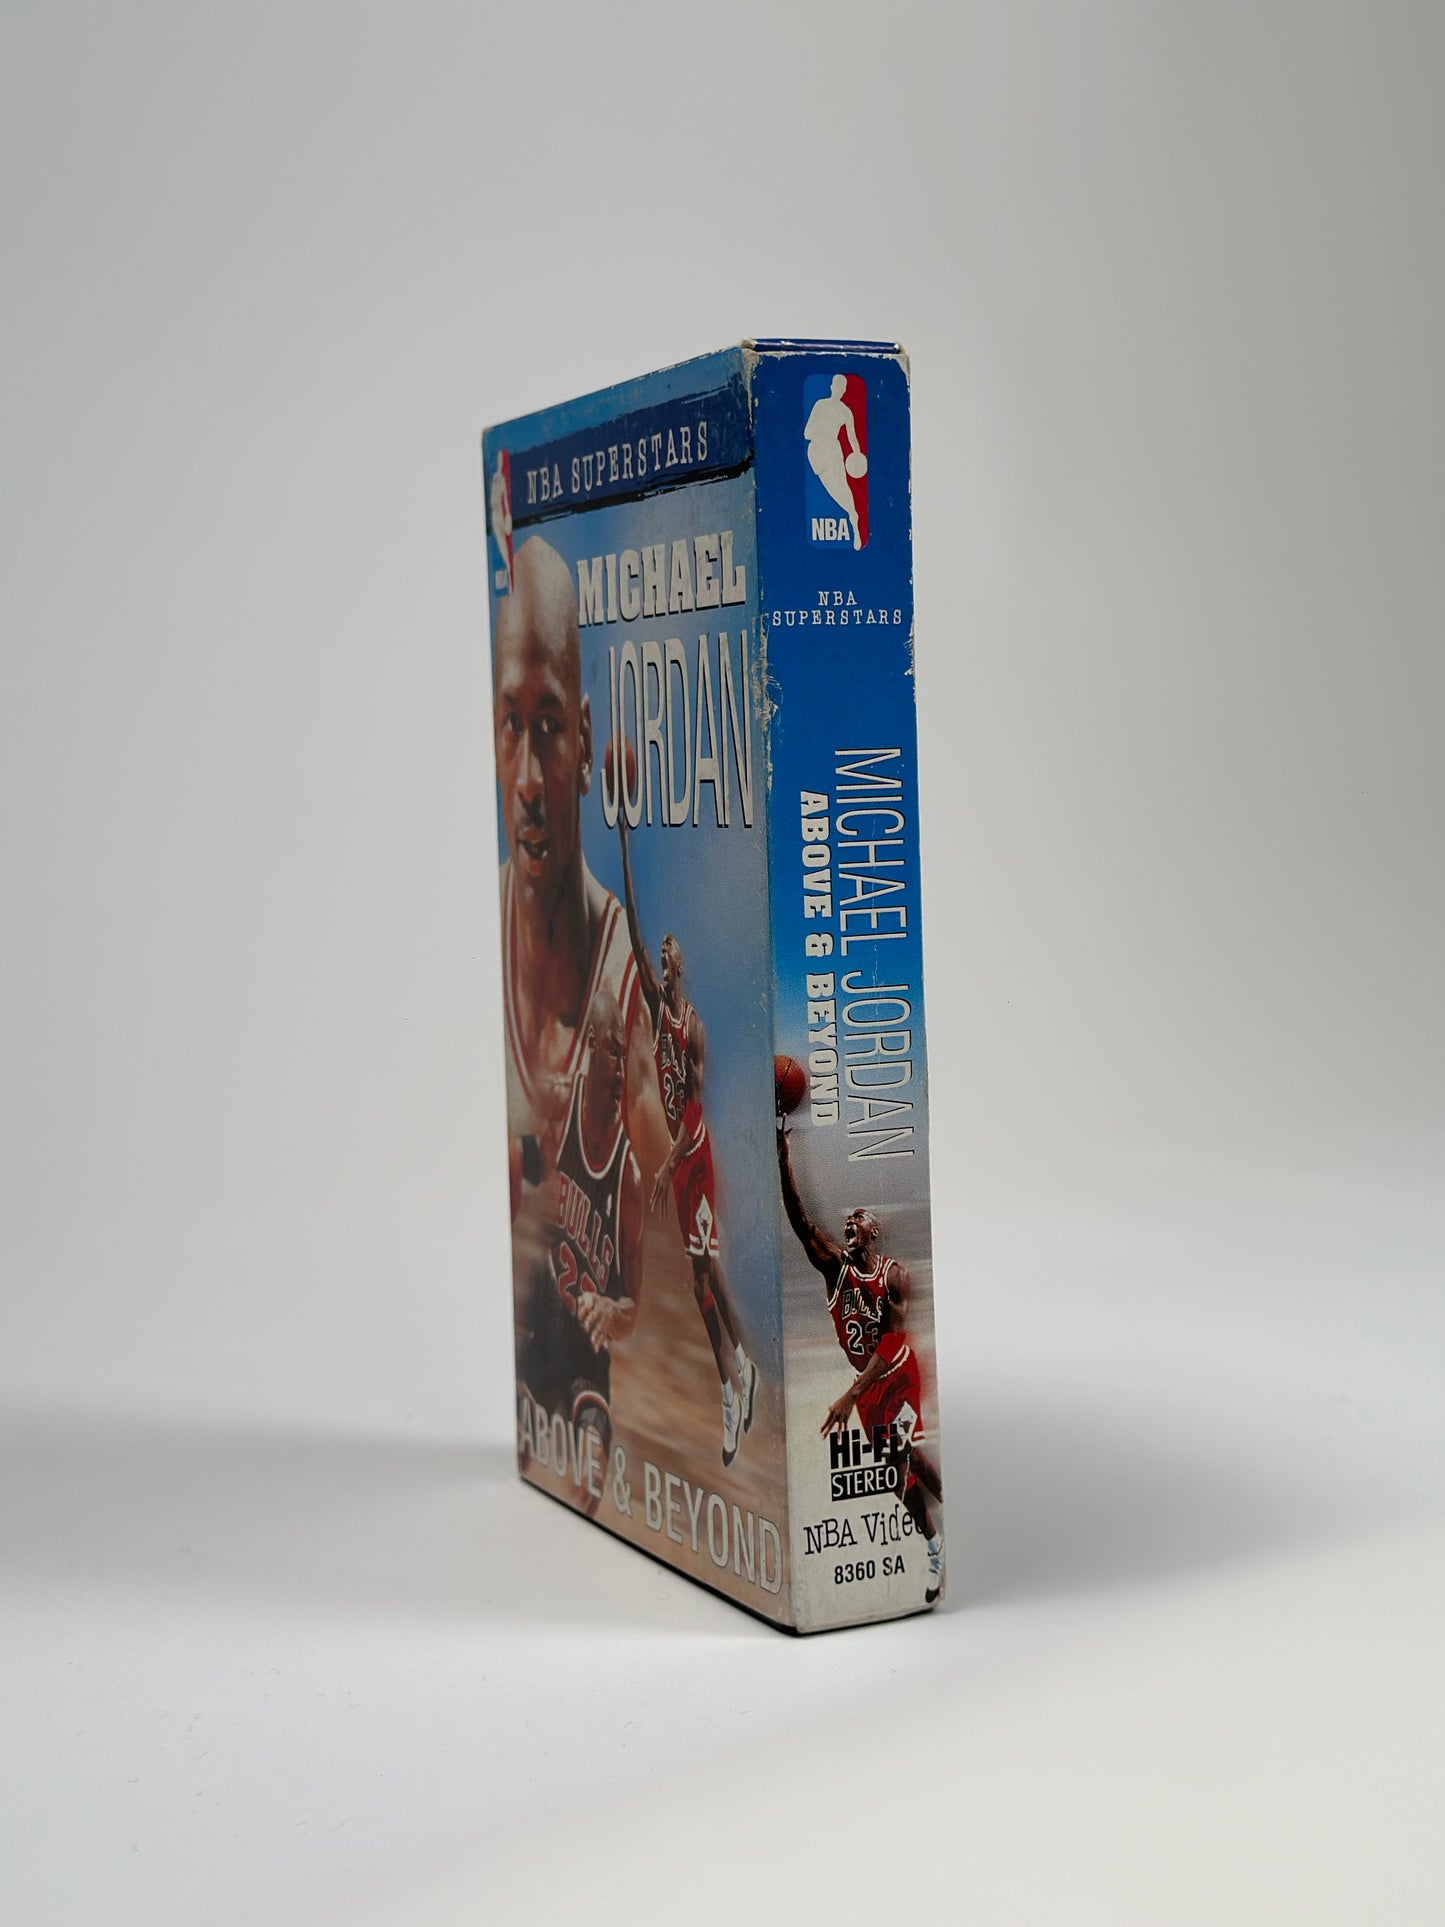 VHS MICHEAL JORDAN (NBA)